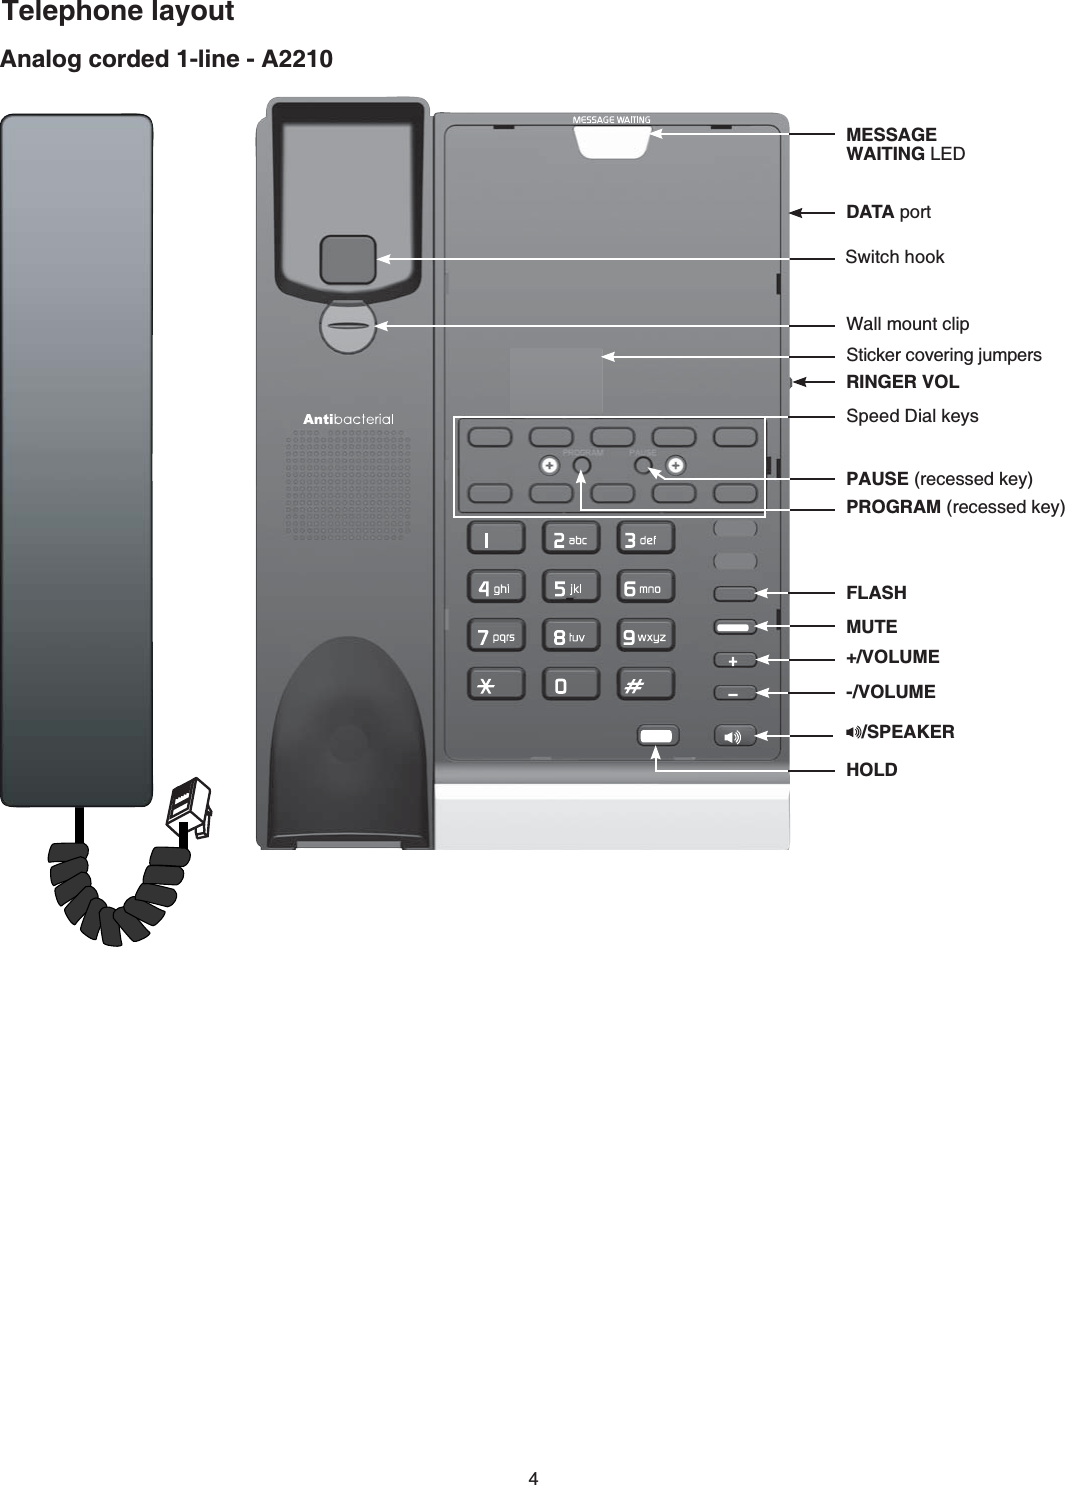 4Telephone layoutAnalog corded 1-line - A2210-/VOLUMEMUTEFLASHSpeed Dial keysDATA portMESSAGEWAITING LEDWall mount clipRINGER VOLHOLD/SPEAKERPROGRAMTGEGUUGFMG[PAUSETGEGUUGFMG[+/VOLUMESwitch hookSticker covering jumpers